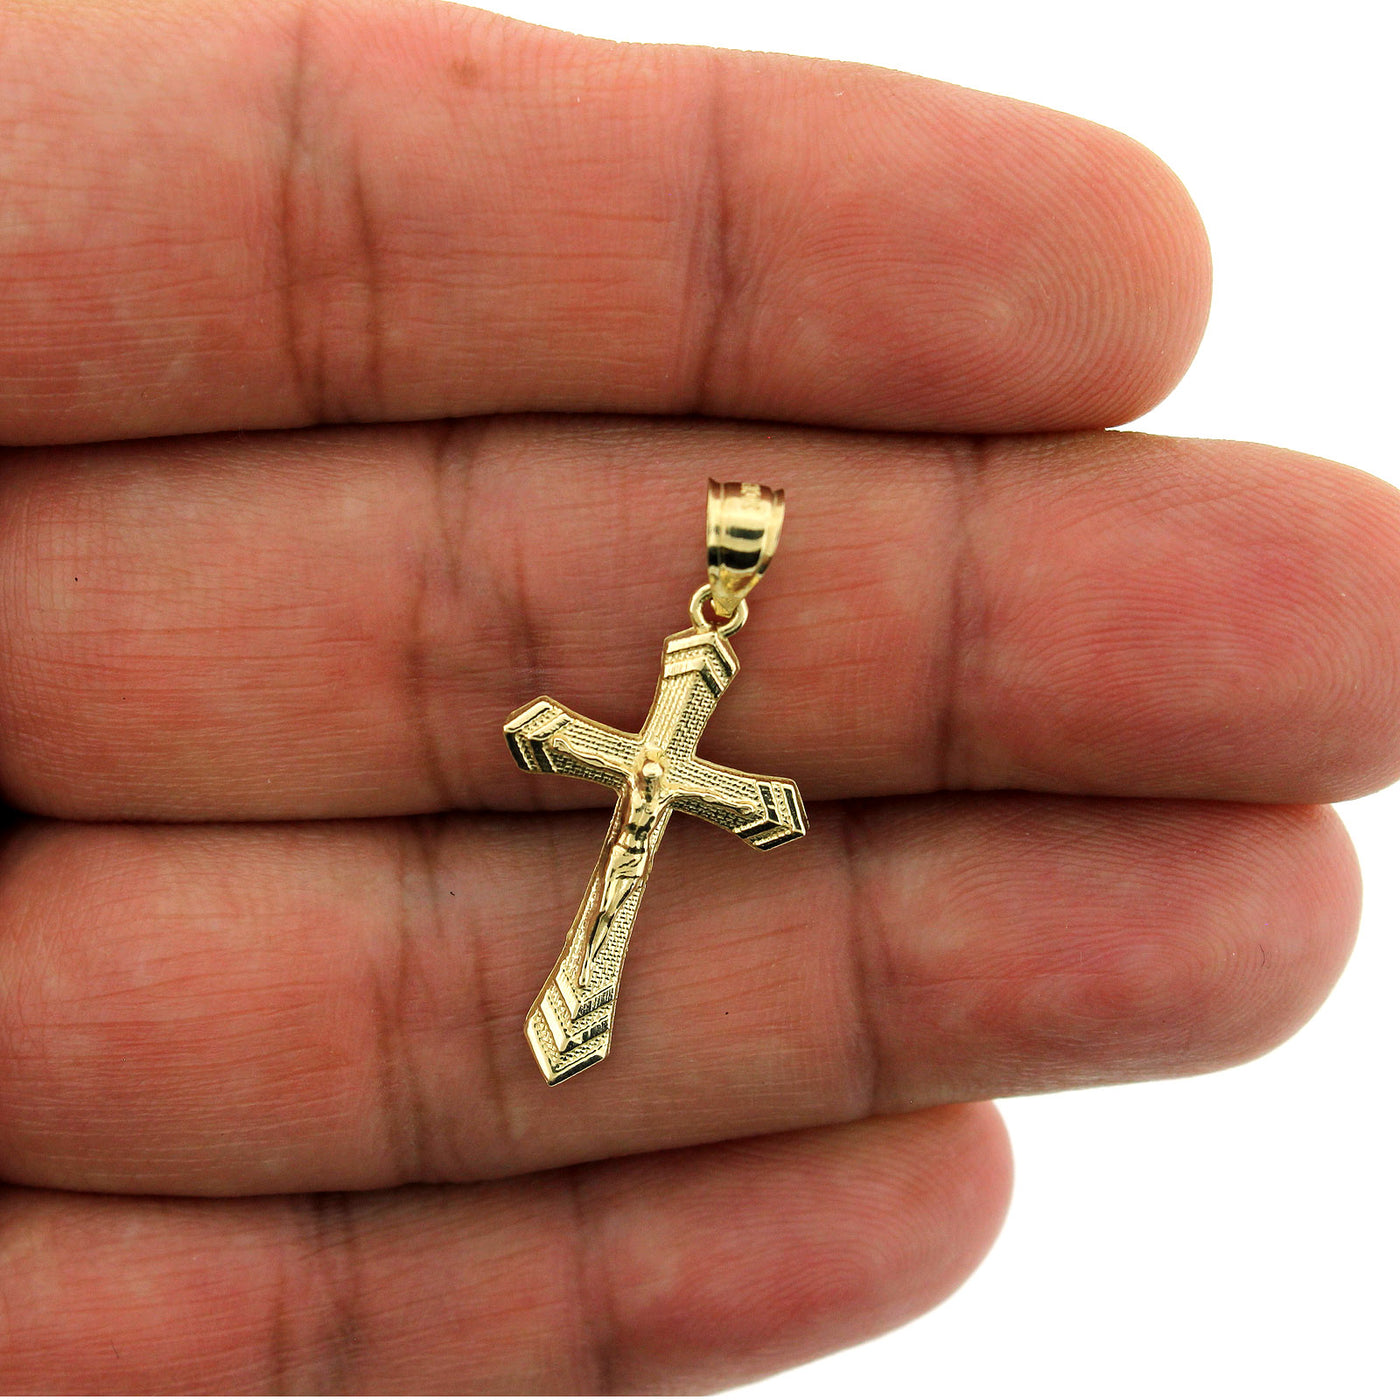 Real 10K Yellow Gold Diamond Cut Jesus Crucifix Cross Charm Pendant & 2.5MM Rope Chain Necklace Set